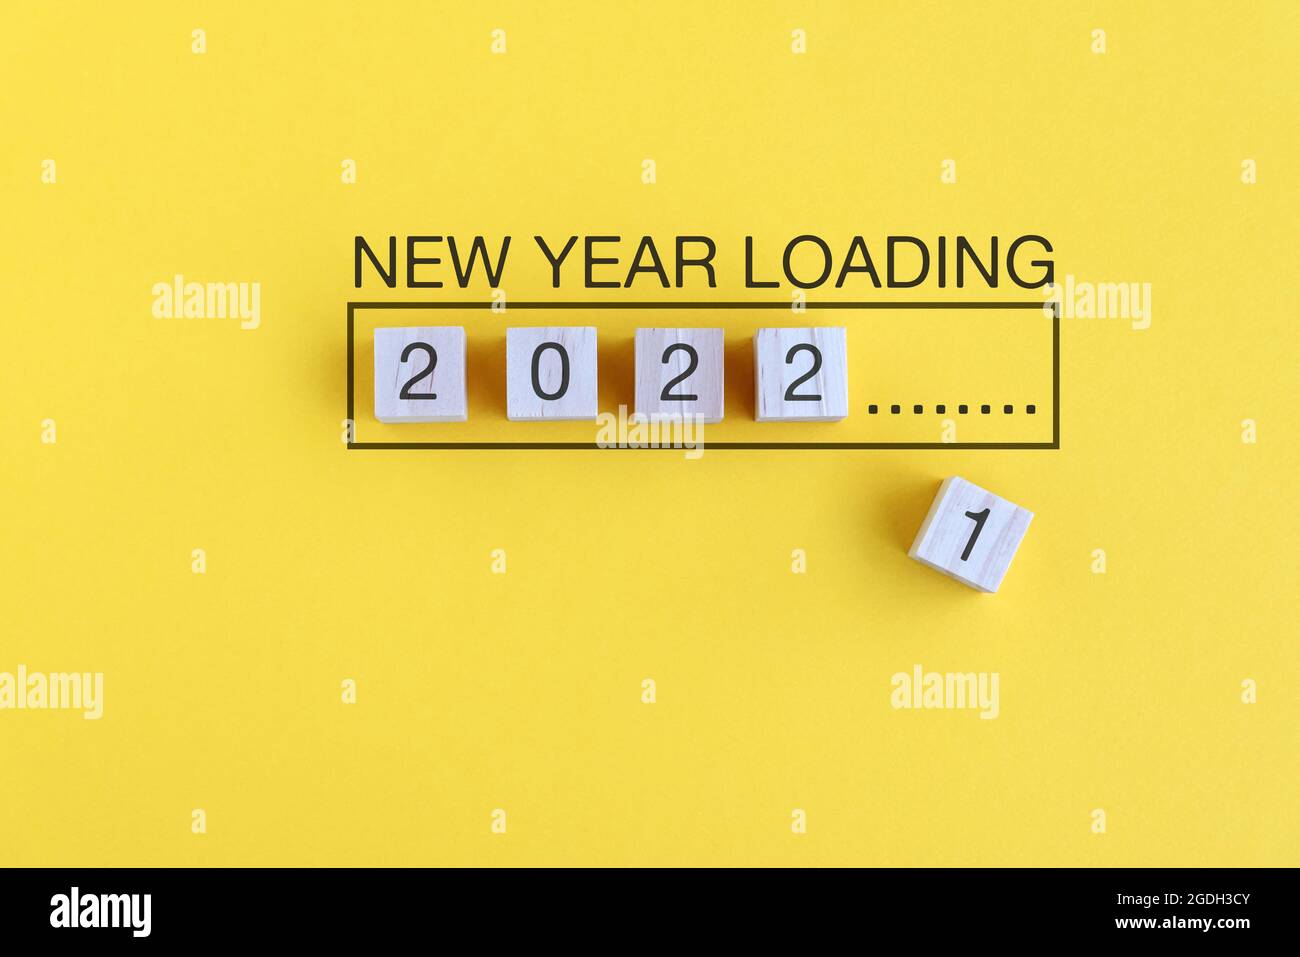 New Year 2022 Loading on yellow background Stock Photo